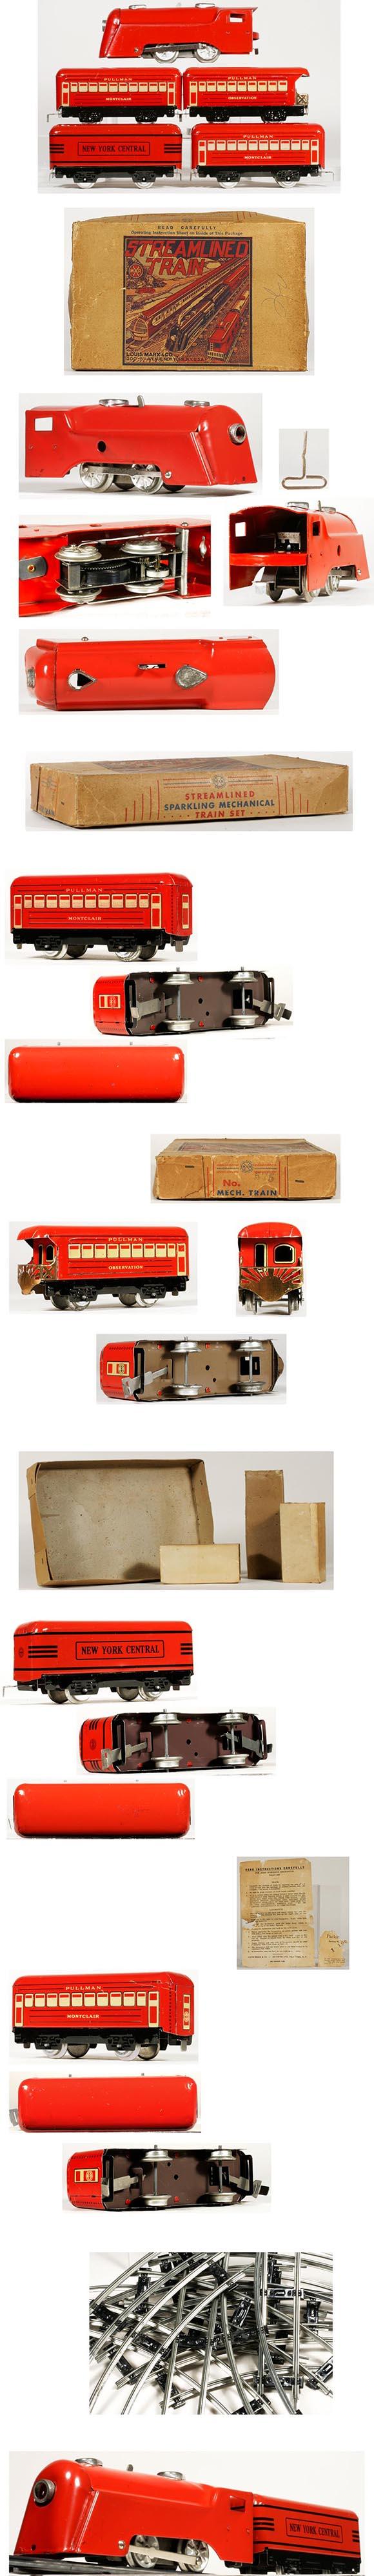 1940 marx train set